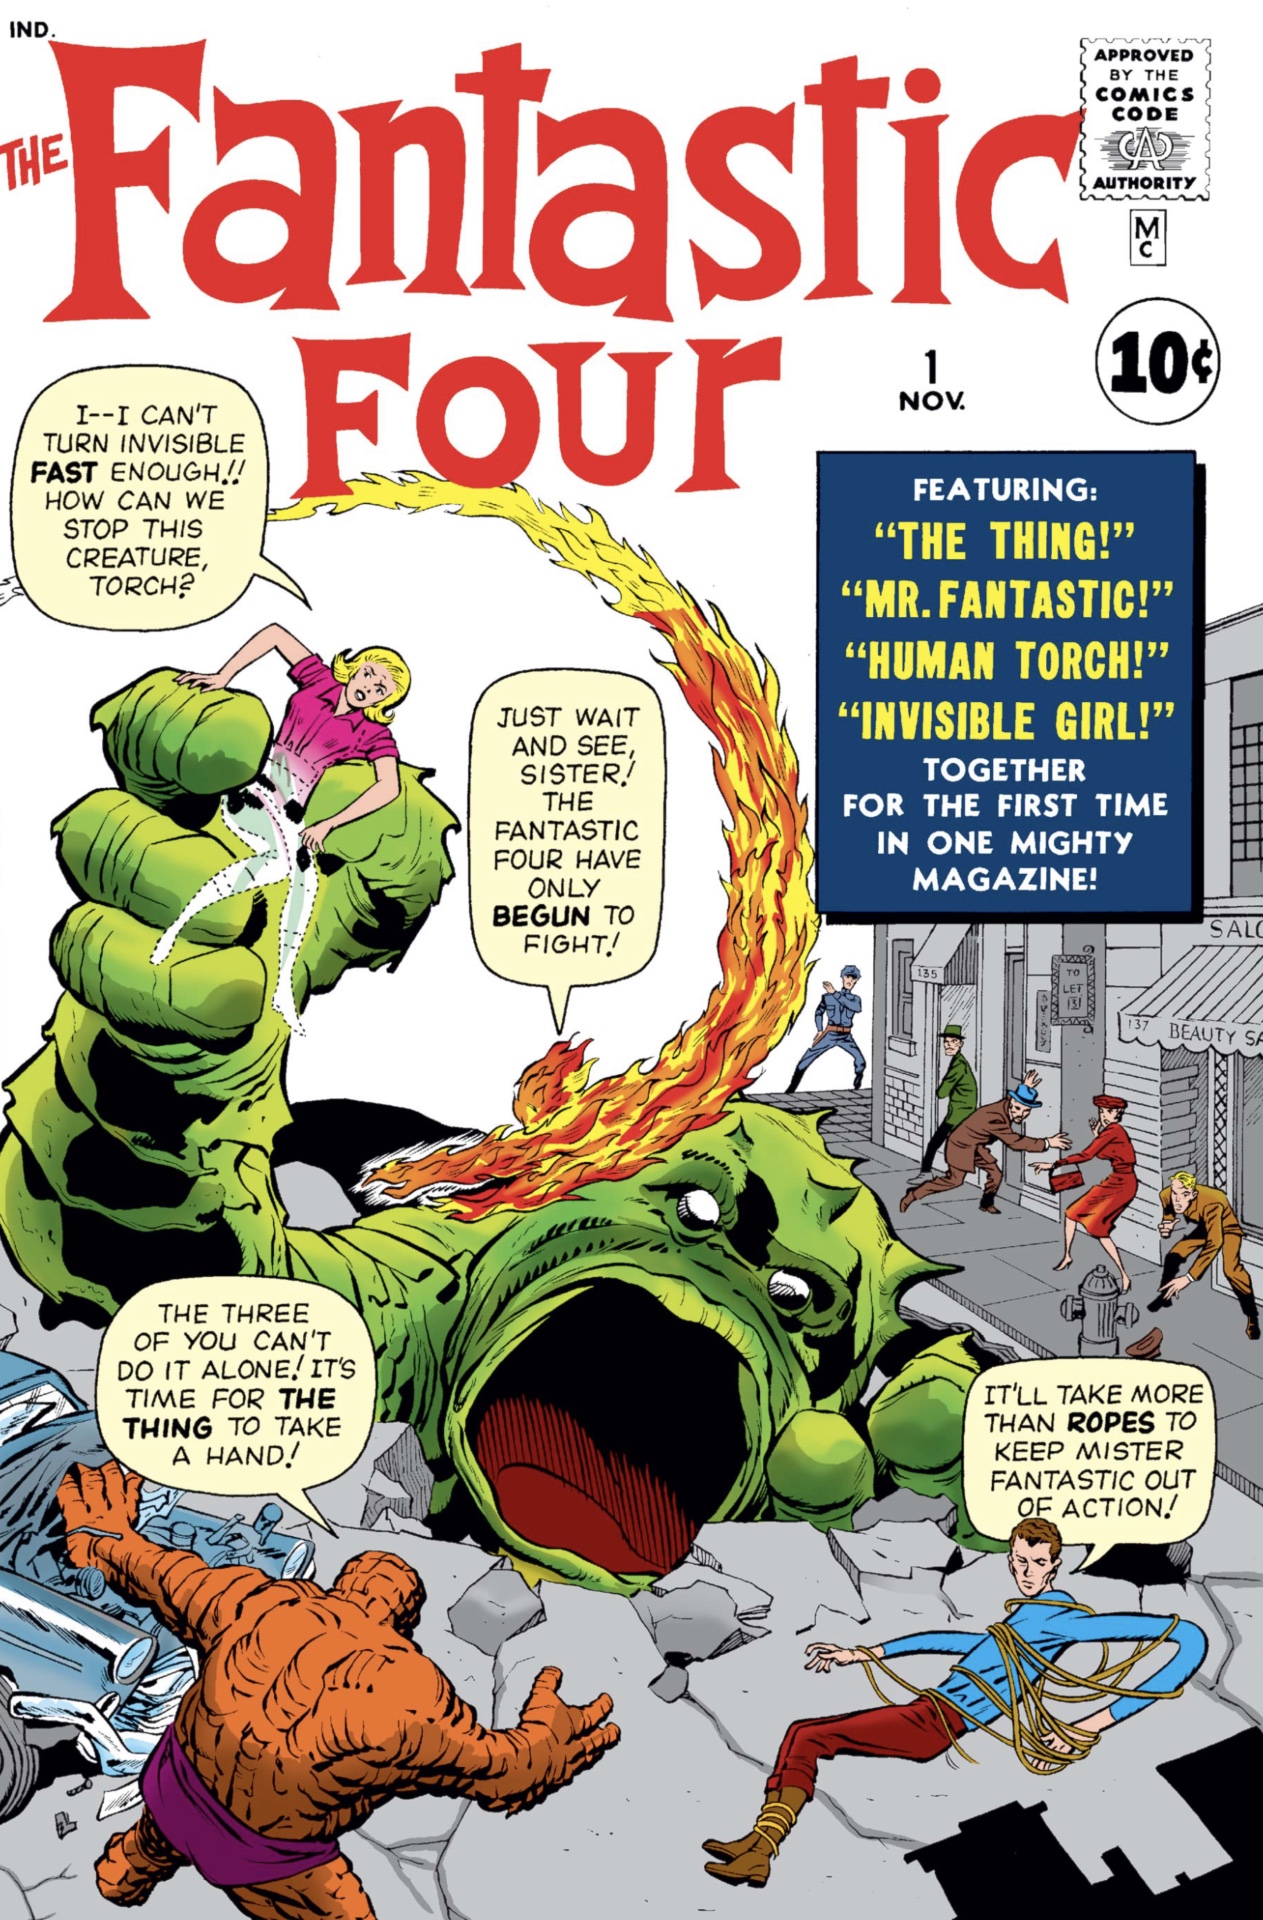 Fantastic Four #1 cover